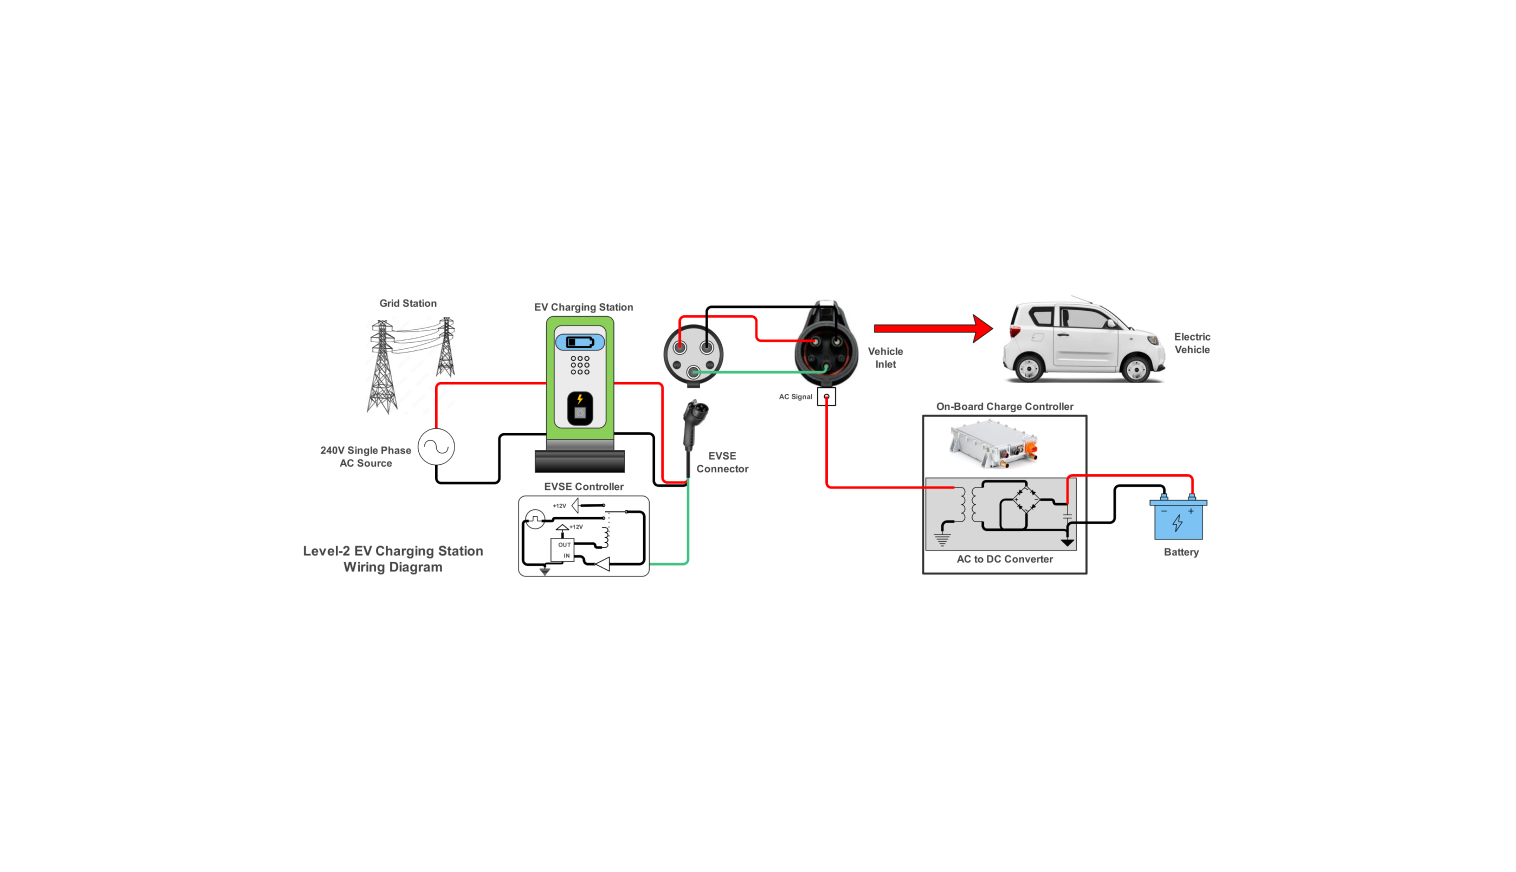 Level-2 EV charging station wiring diagram